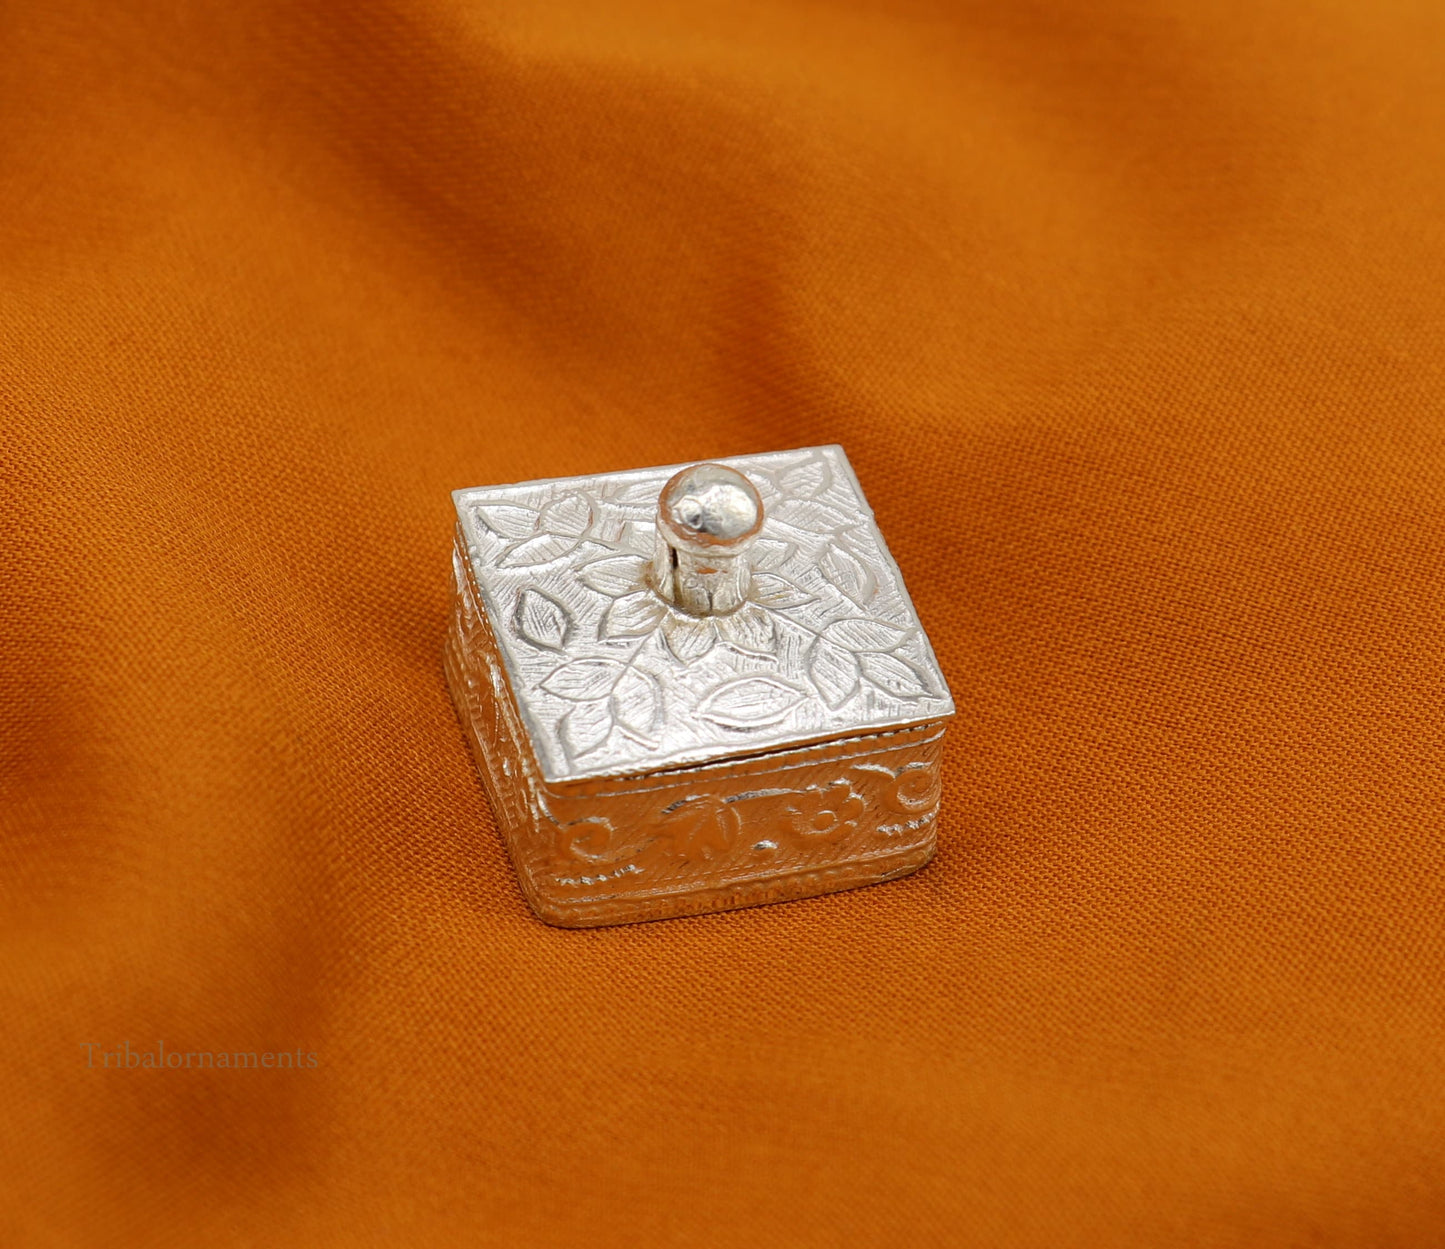 925 sterling silver trinket box, kajal box/casket box bridal square shape sindur box collection, container box, eyeliner box gifting stb188 - TRIBAL ORNAMENTS